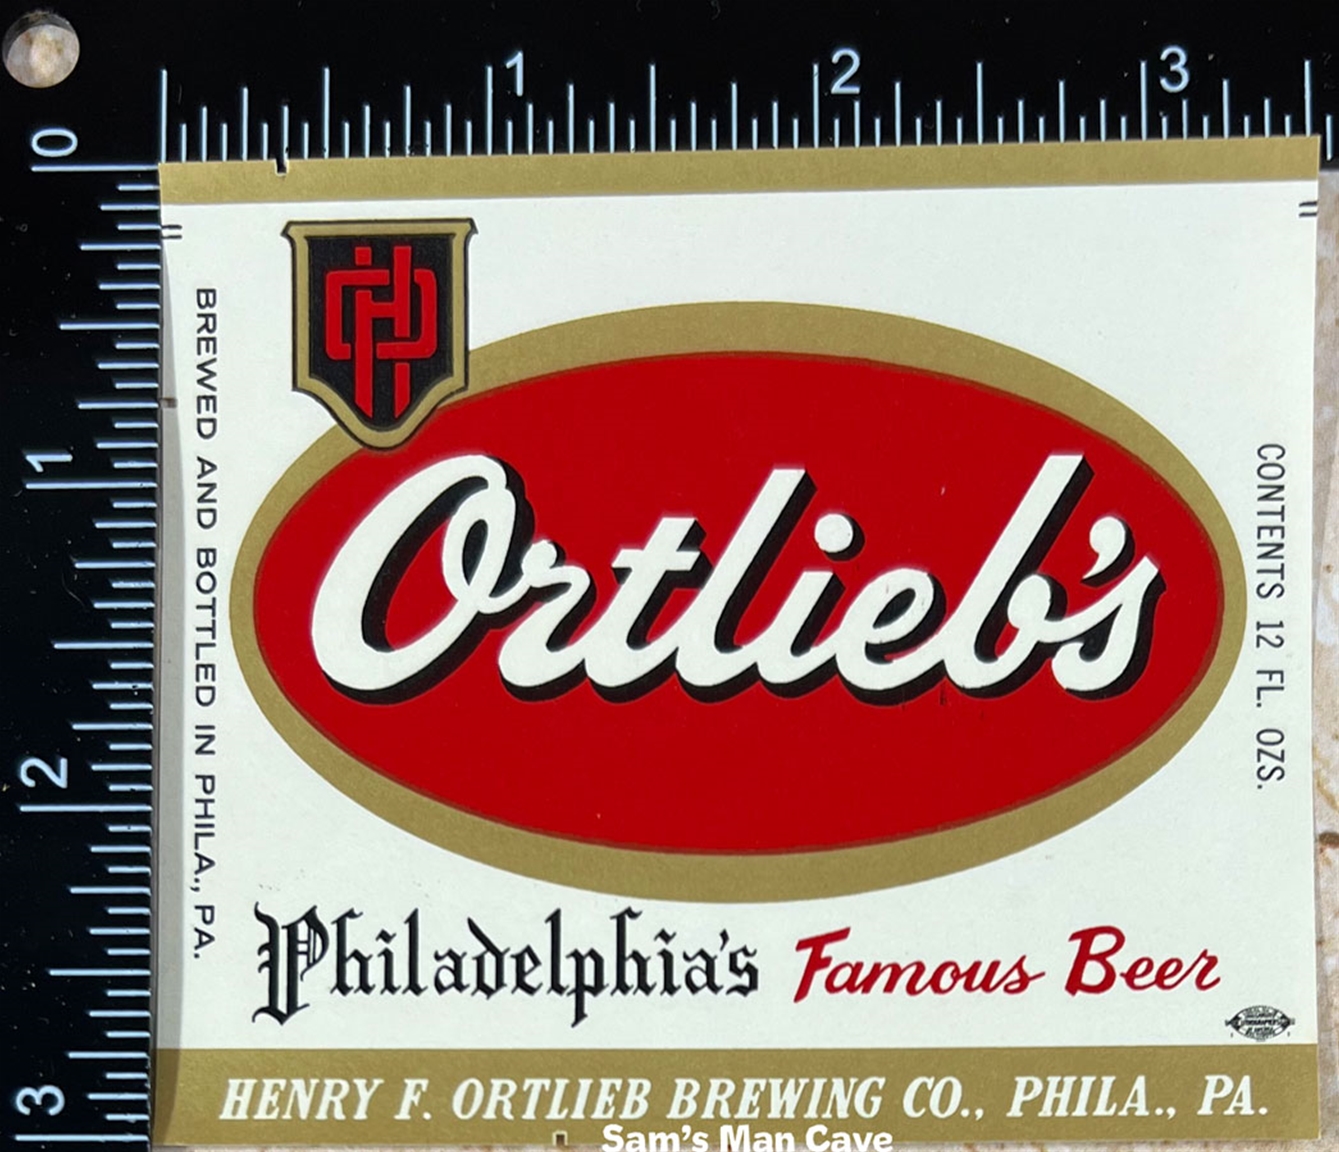 Ortlieb's Philadelphia's Famous Beer Label